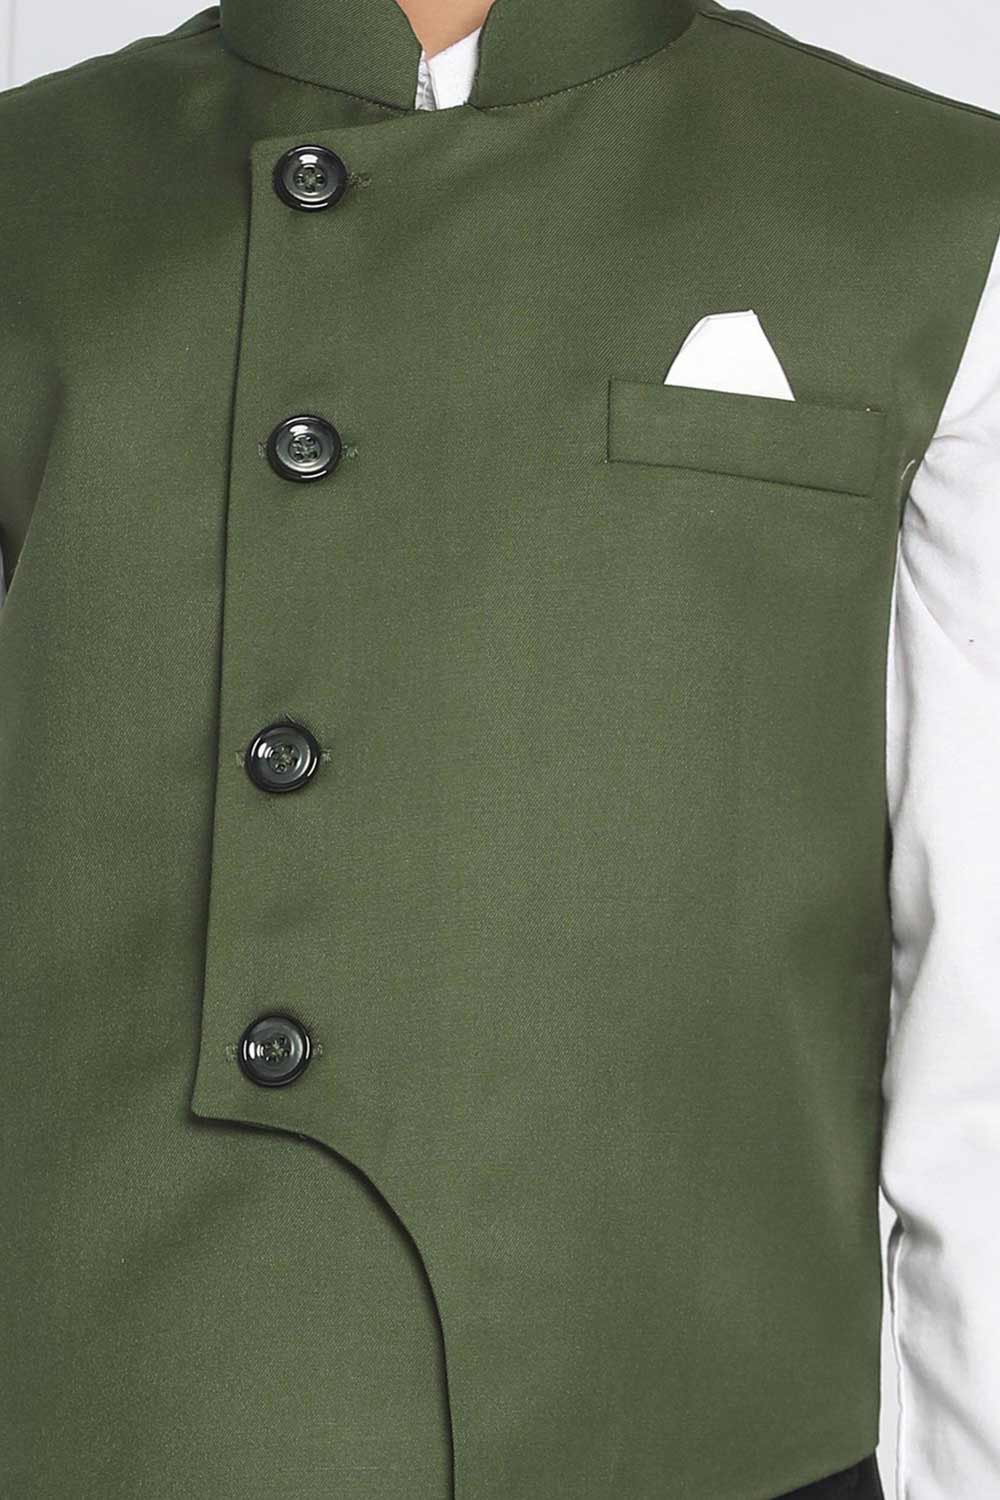 Shop Green Nehru Jacket Online Collection at Karmaplace